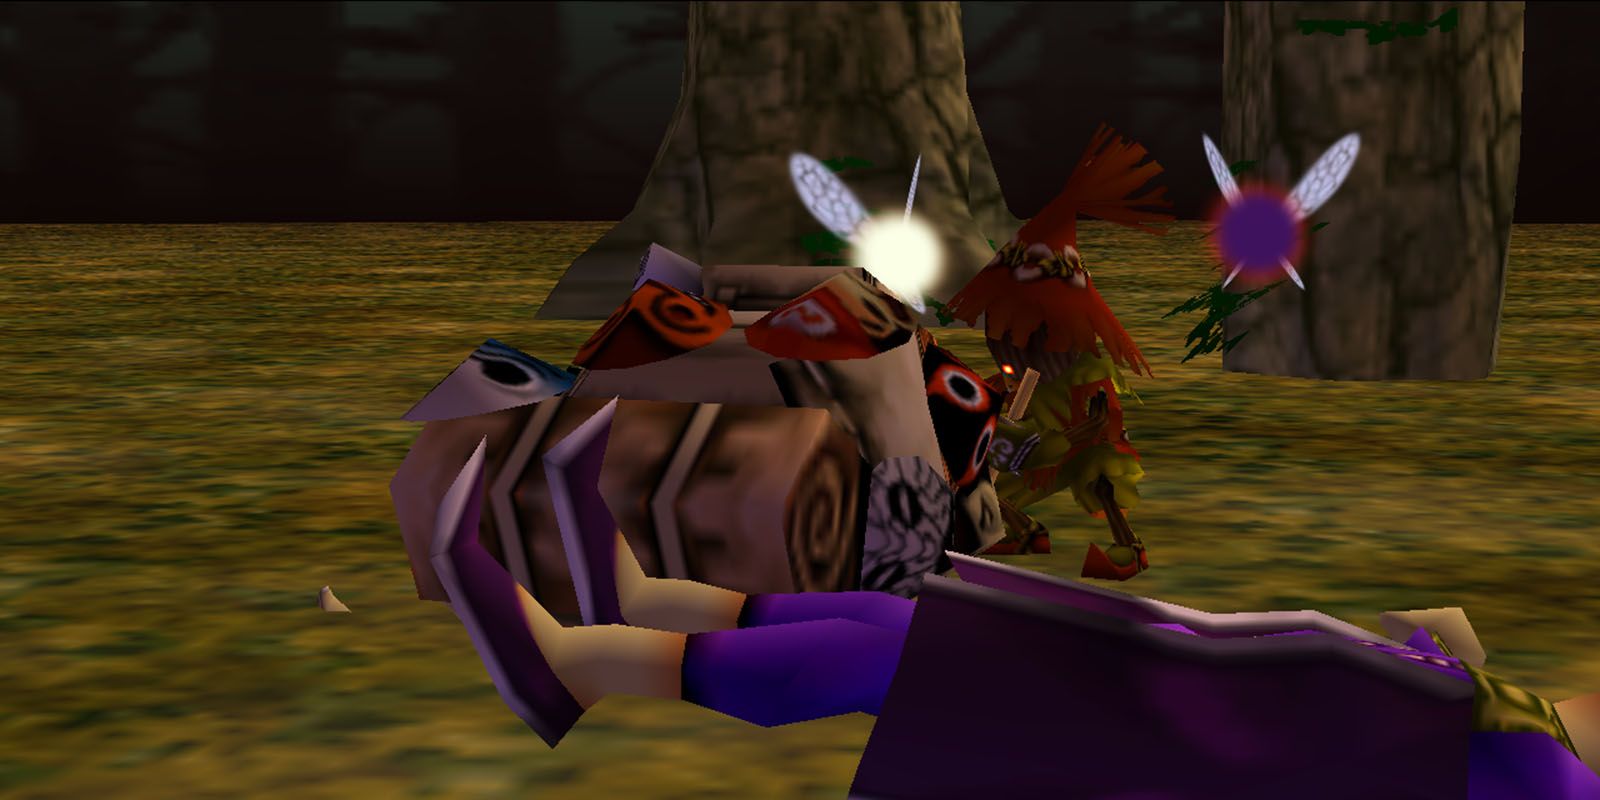 Screenshot of Skull Kid stealing Majora’s Mask while the Happy Mask Salesman is sleeping.